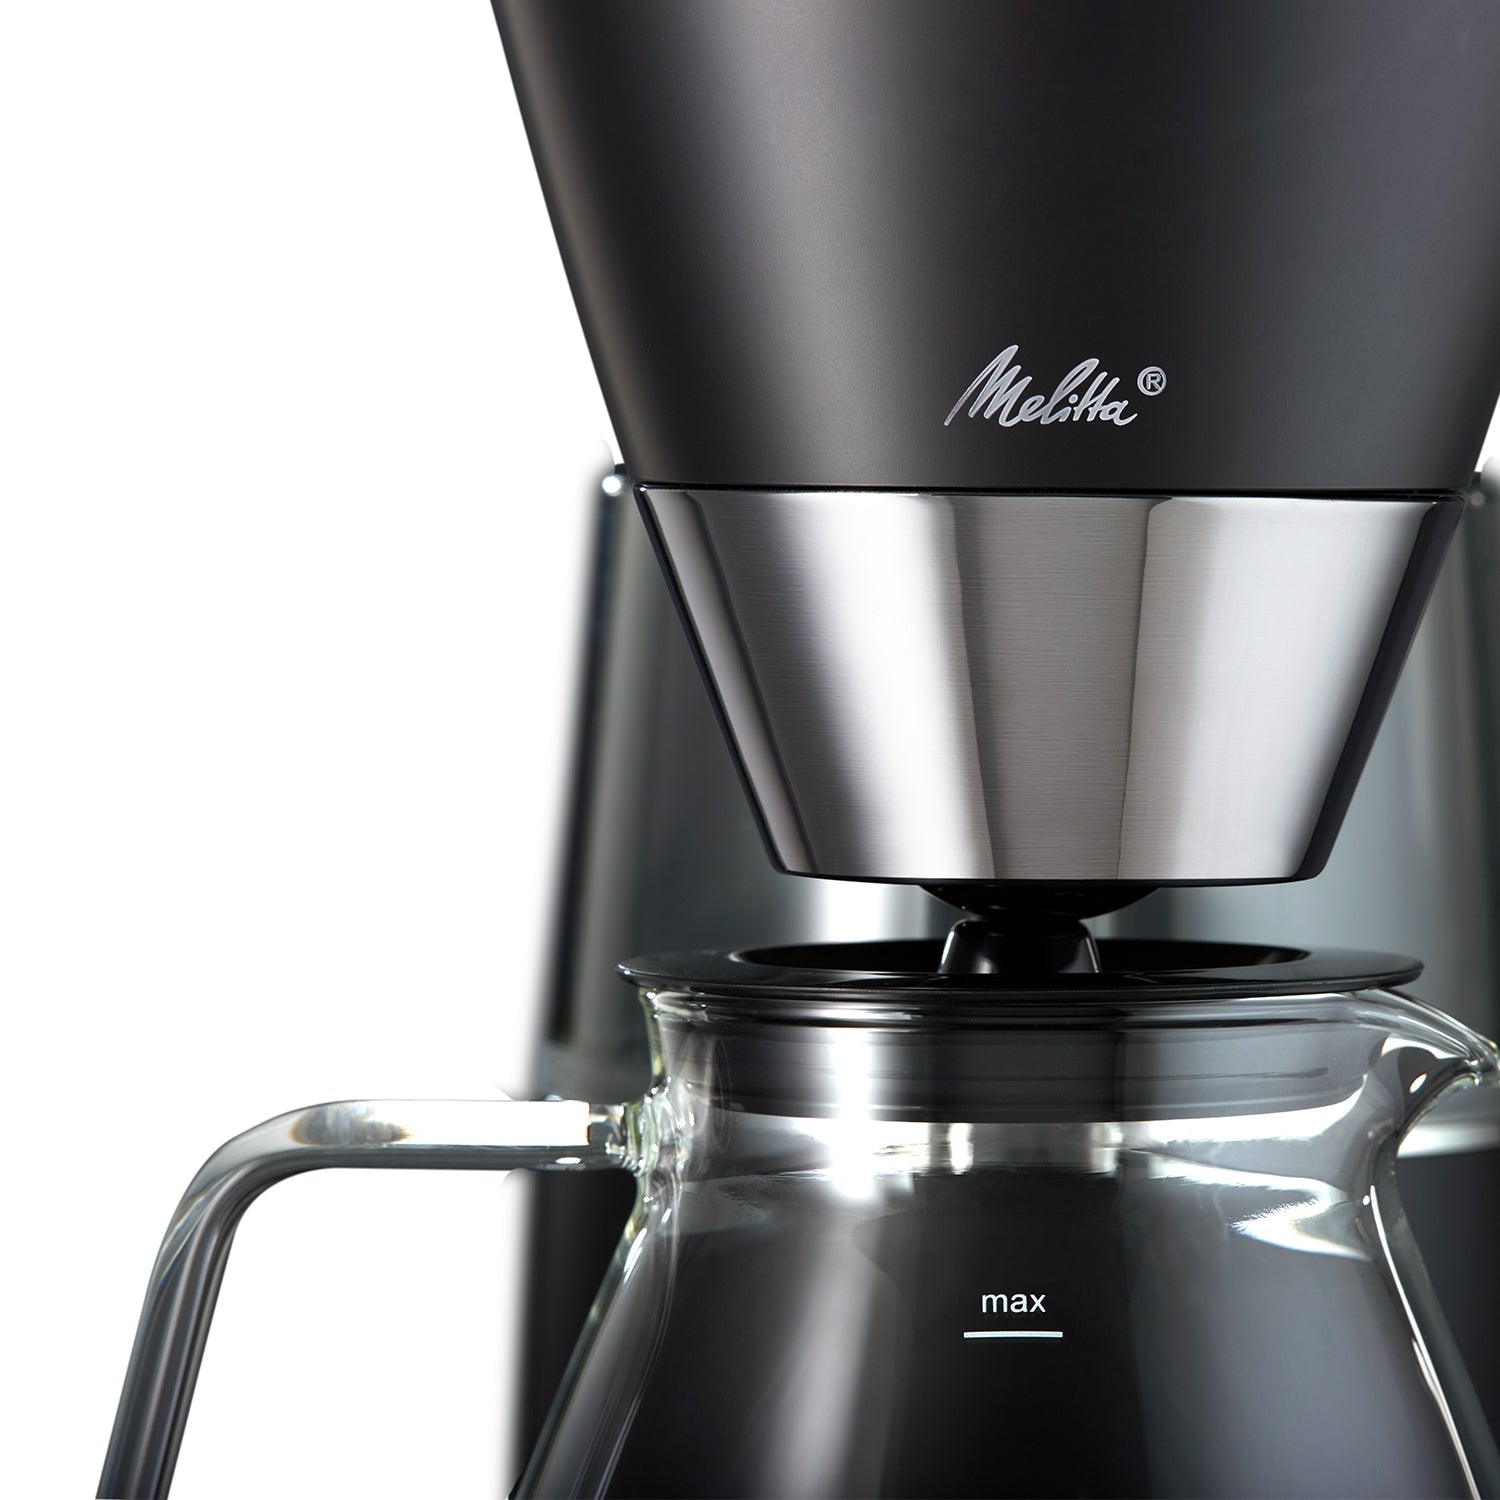 Melitta Vision 12-Cup Drip Coffee Maker